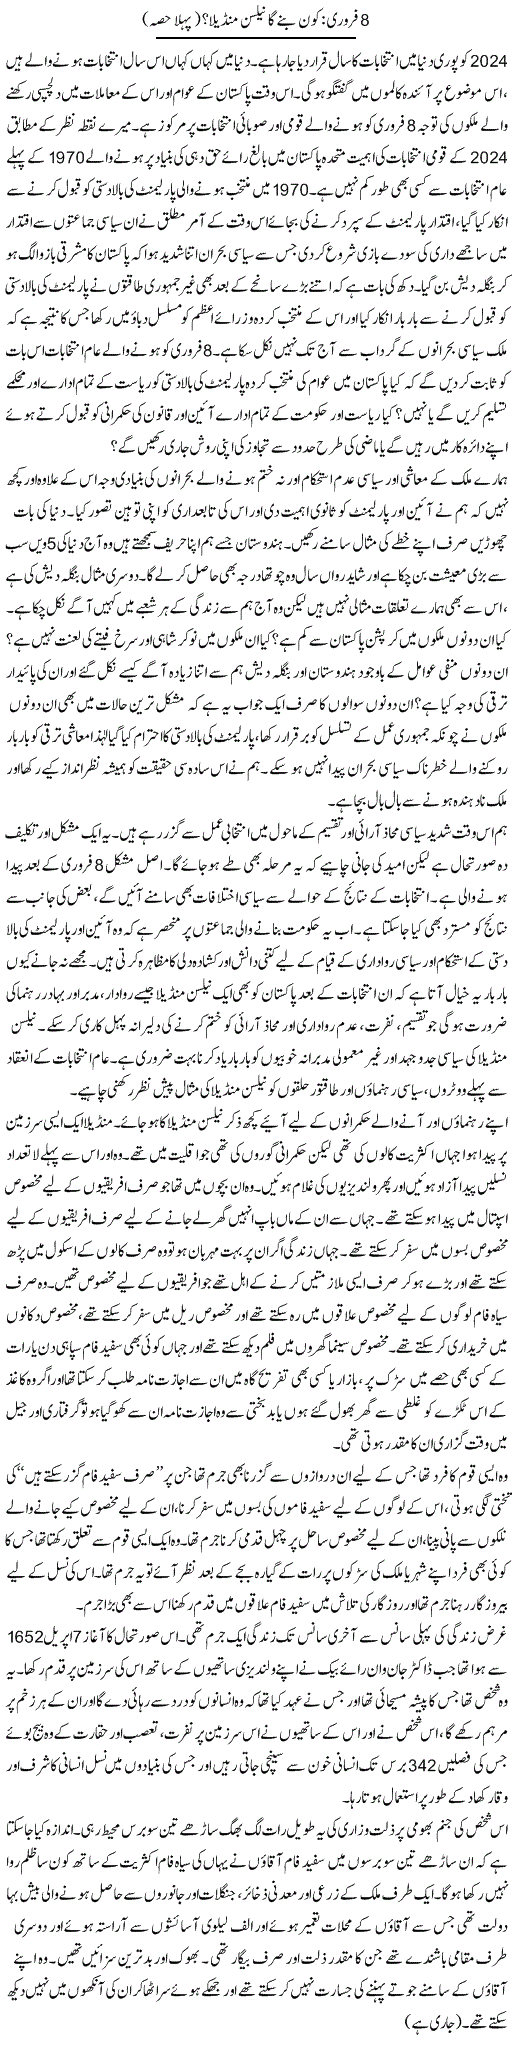 Zahida Hina Urdu Column About Who Will Win 8th February 2024 Pakistan General Election